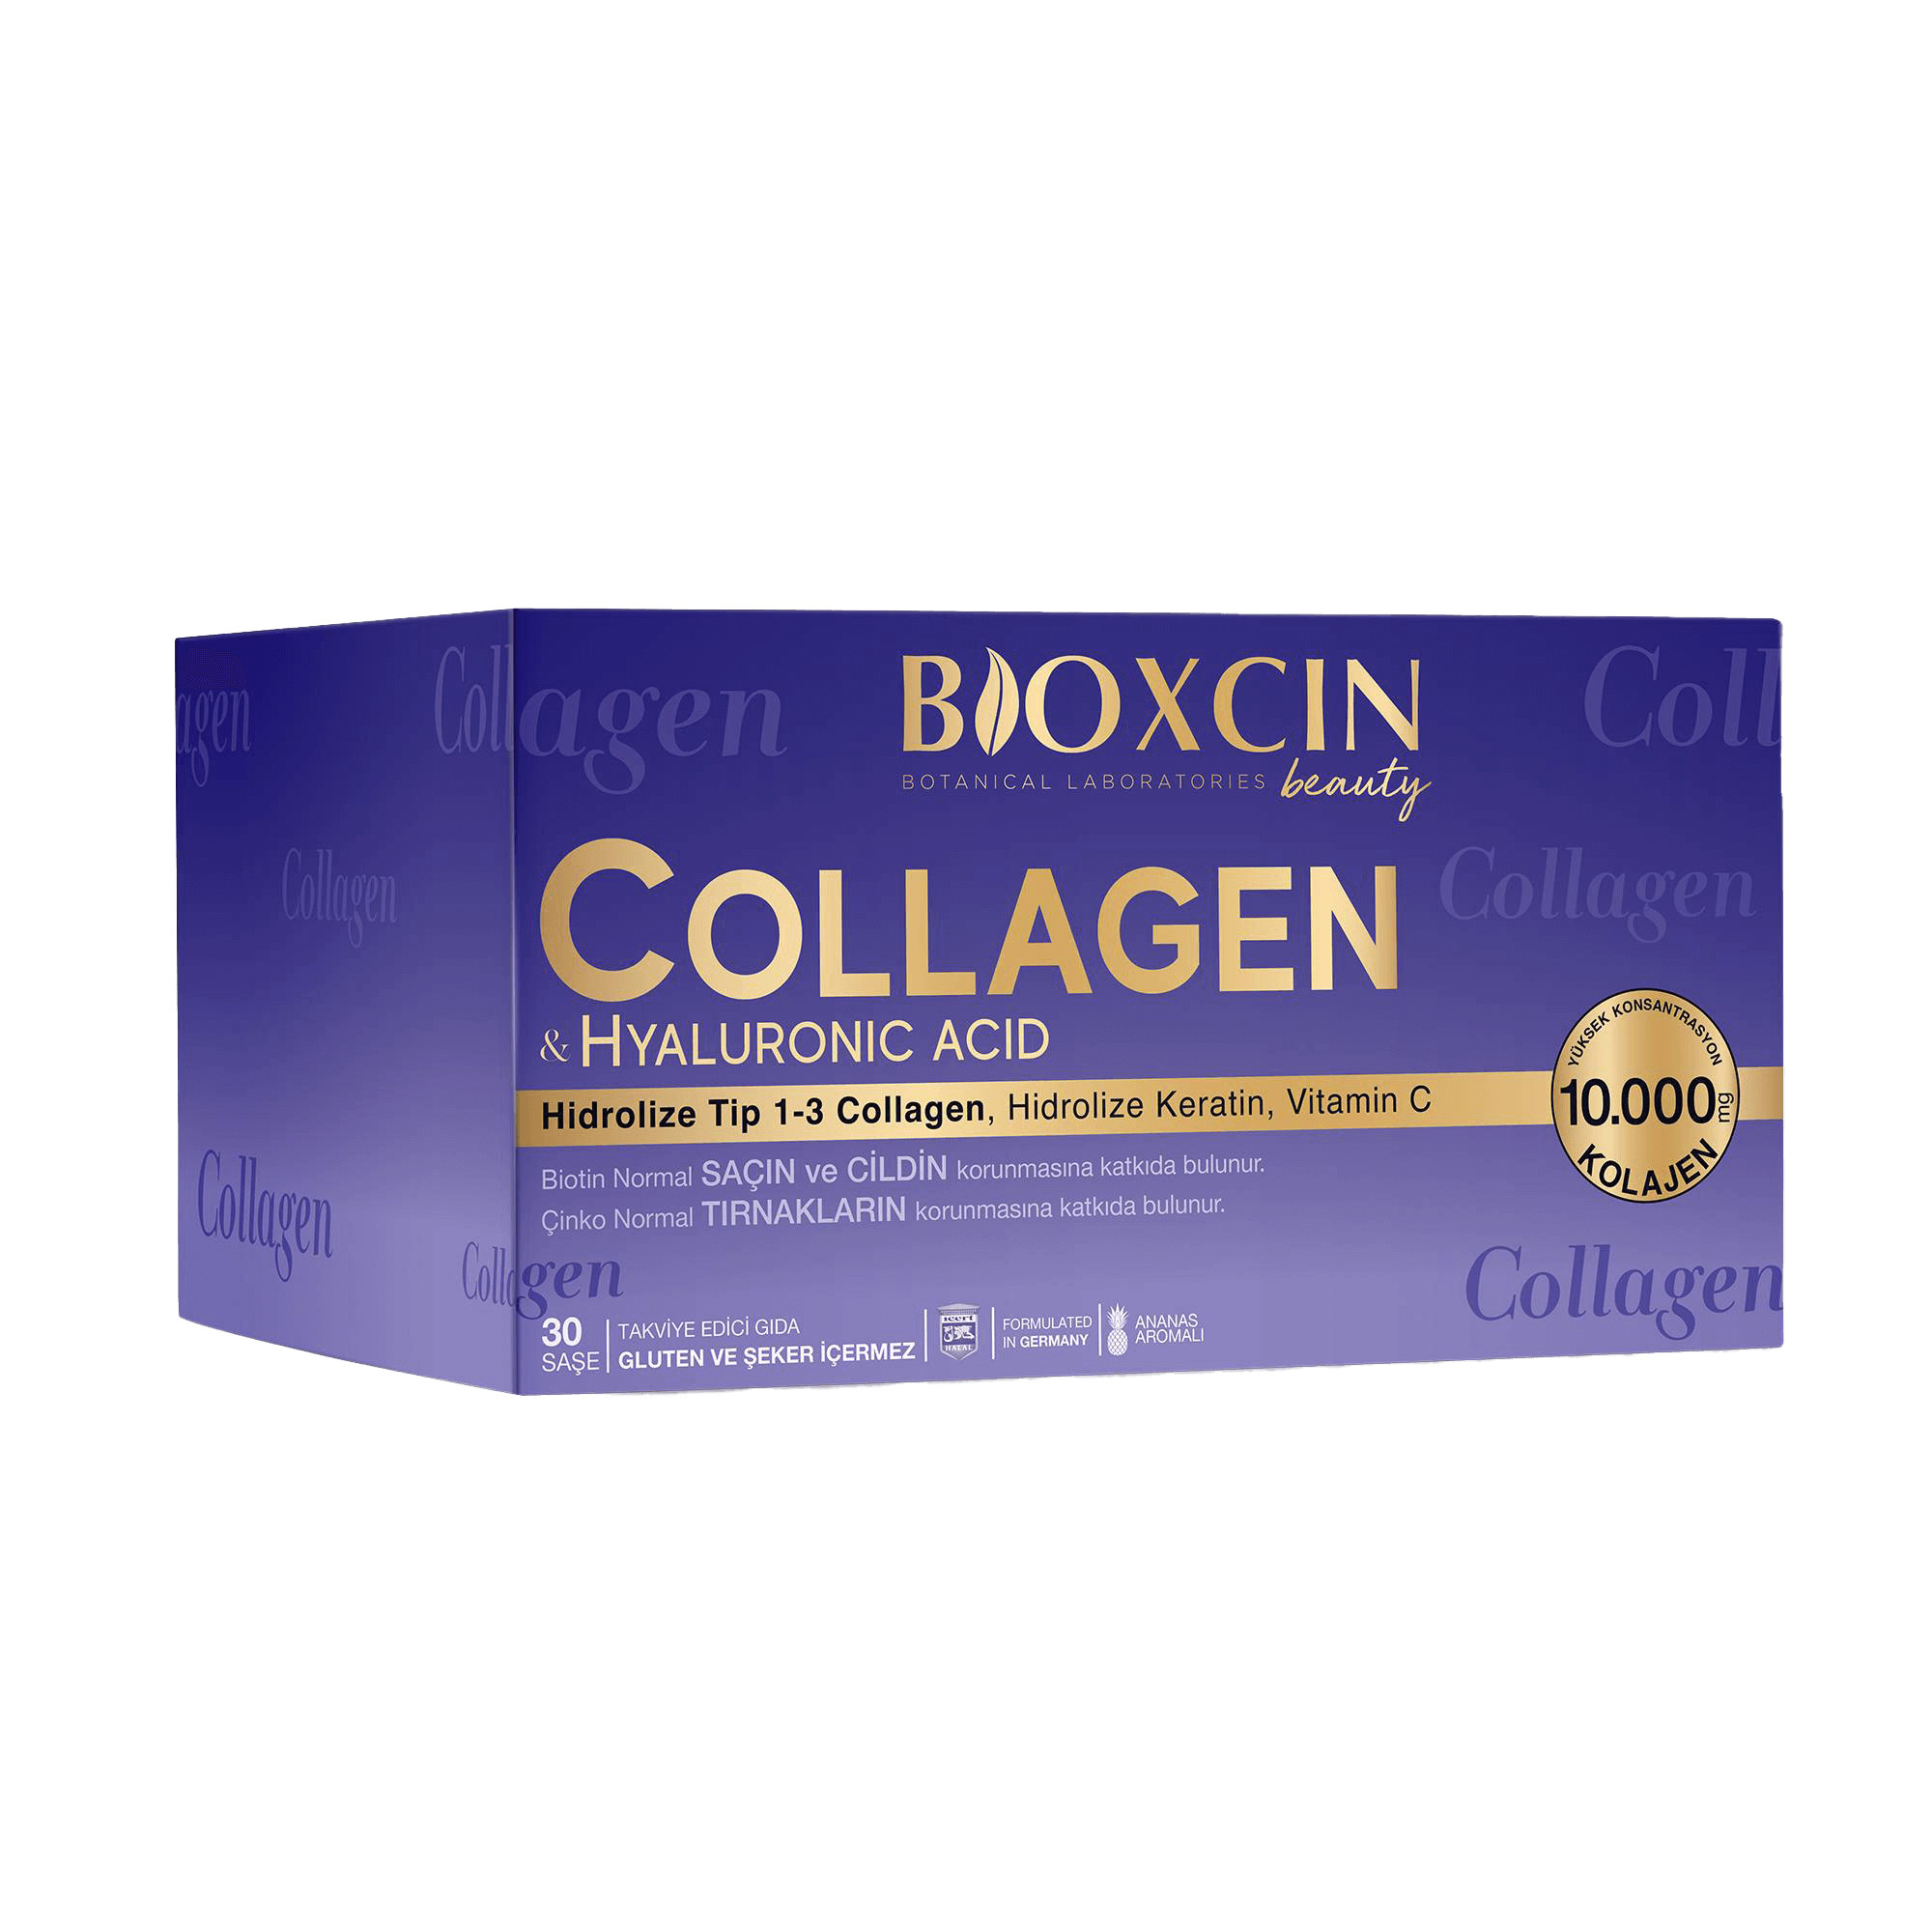 B'oxcin Collagen Serisi